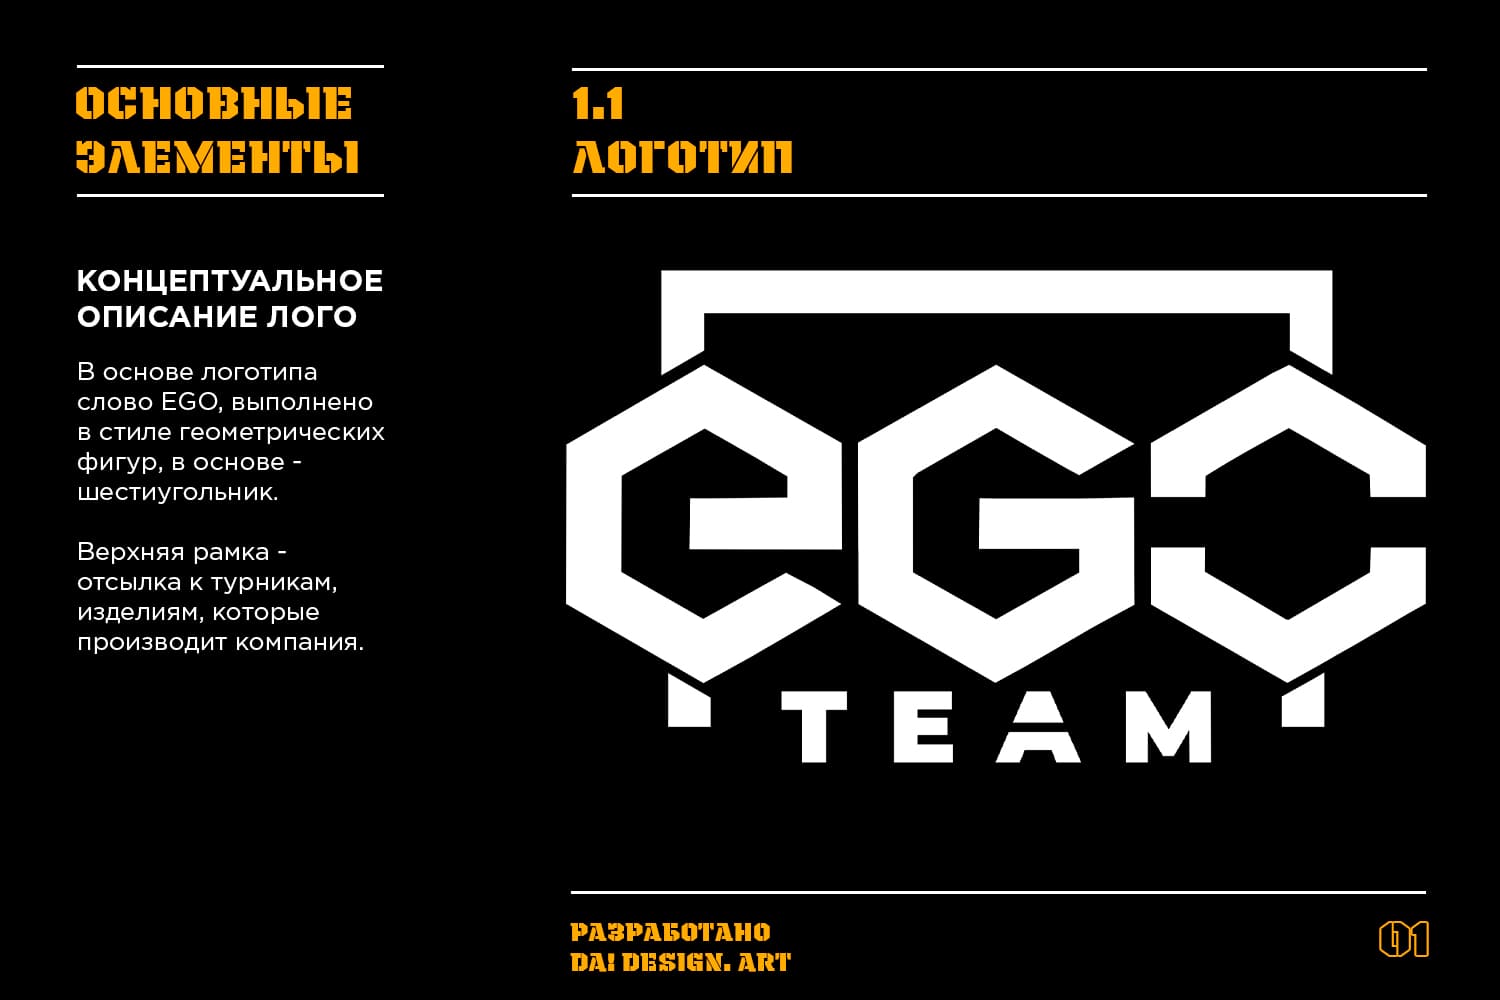 EGO Team corporate identity professional sports equipment manufacturer